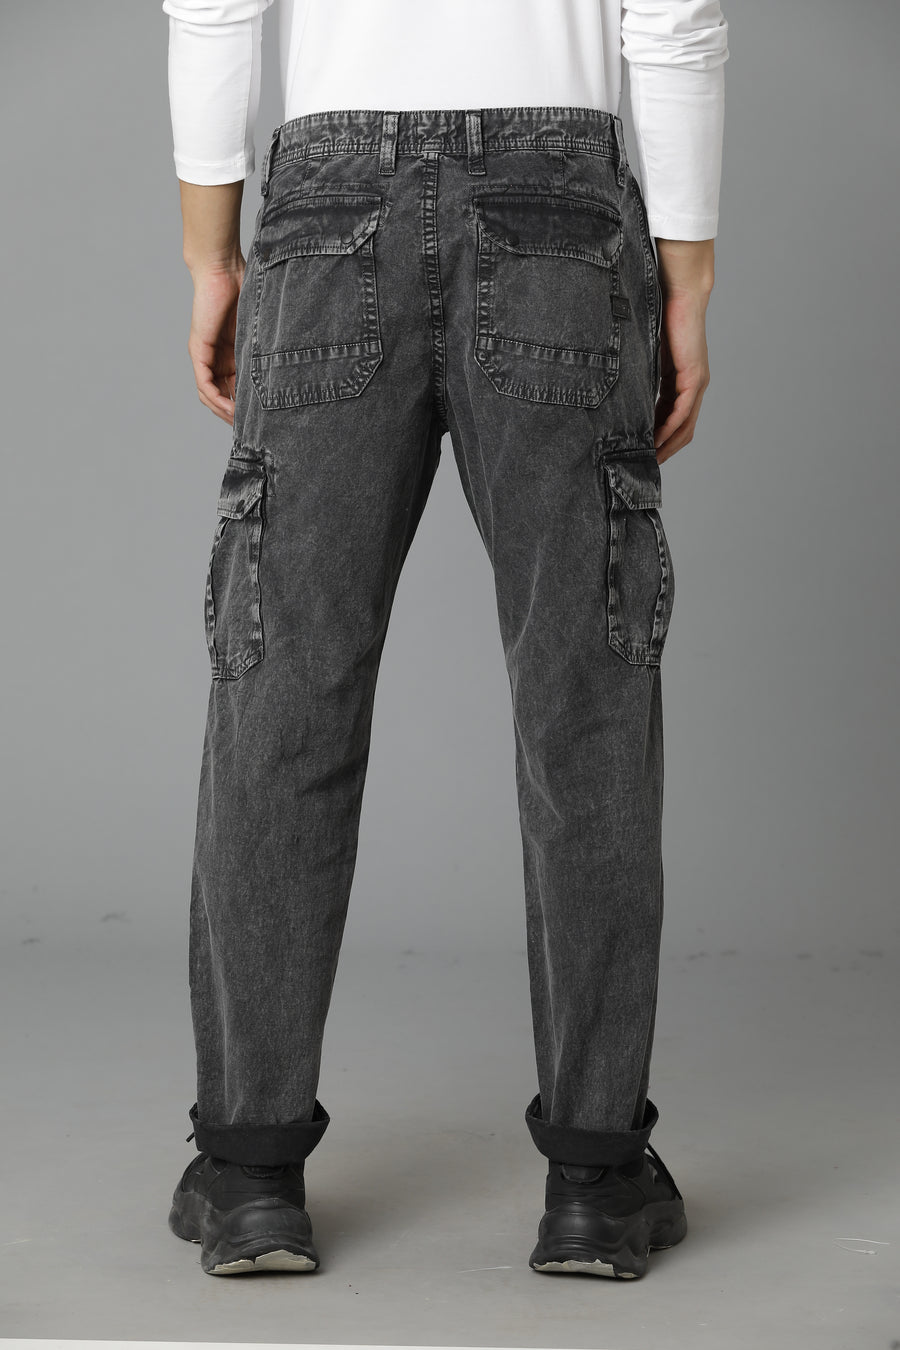 Voi Jeans Men's Black Non Denim Diaplo Cargo Fit Jeans - VOND0203